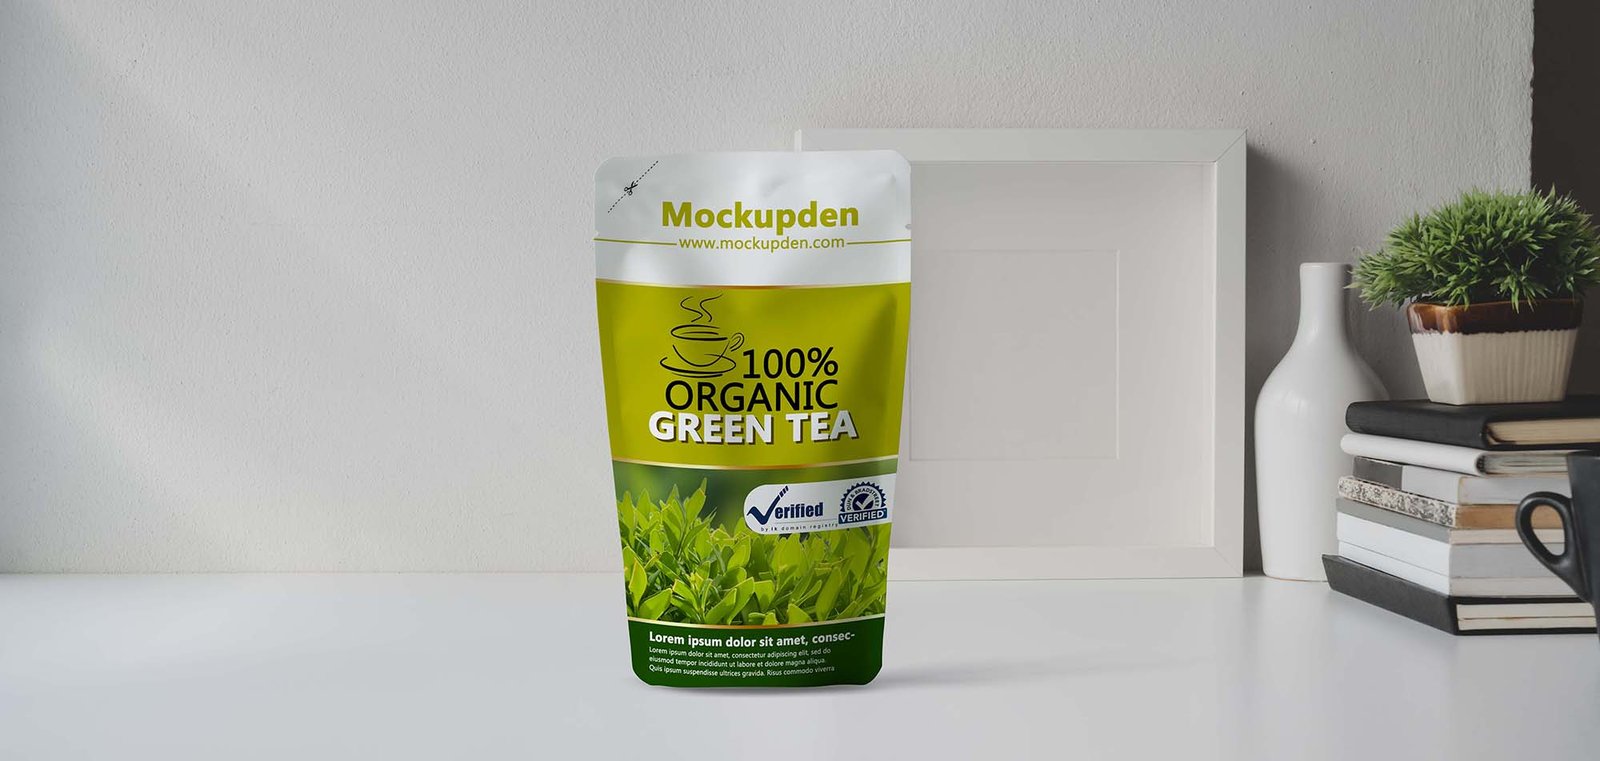 Download Green Tea Paper Bag Mockup PSD Template | Mockupden Exclusive